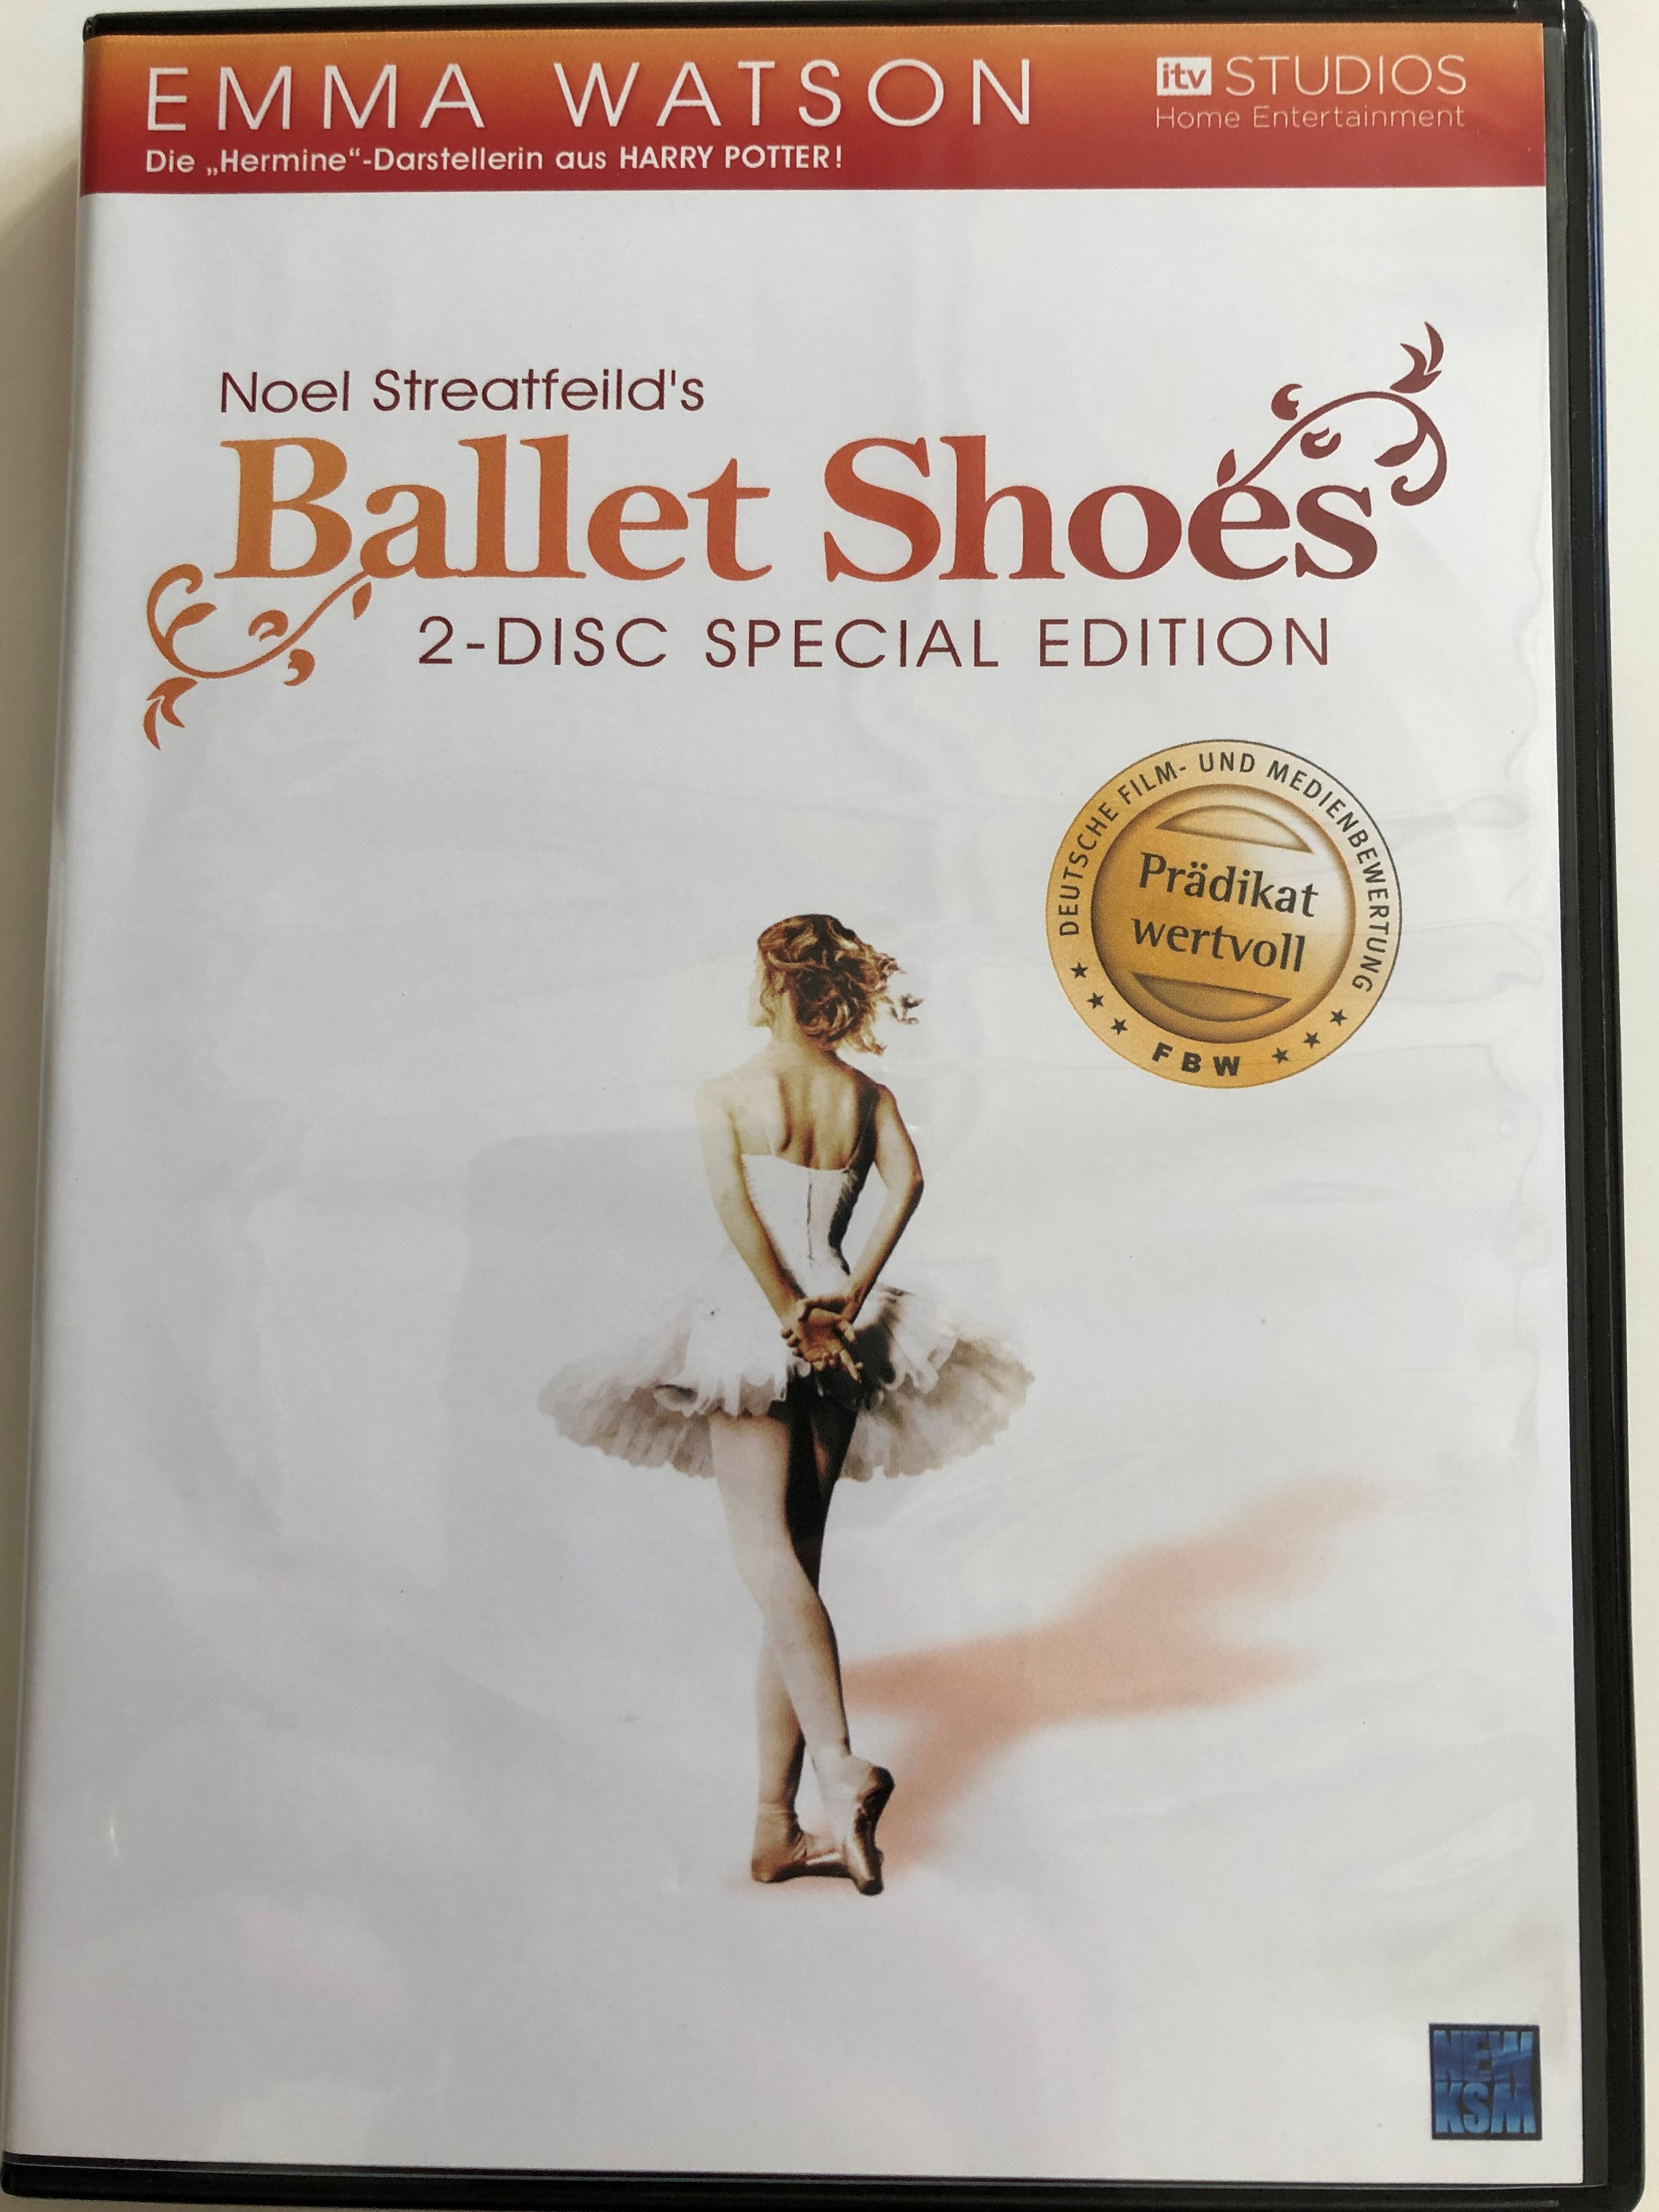 -noel-streatfeild-s-ballet-shoes-dvd-2007-2-disc-special-edition-directed-by-sandra-goldbacher-1-.jpg